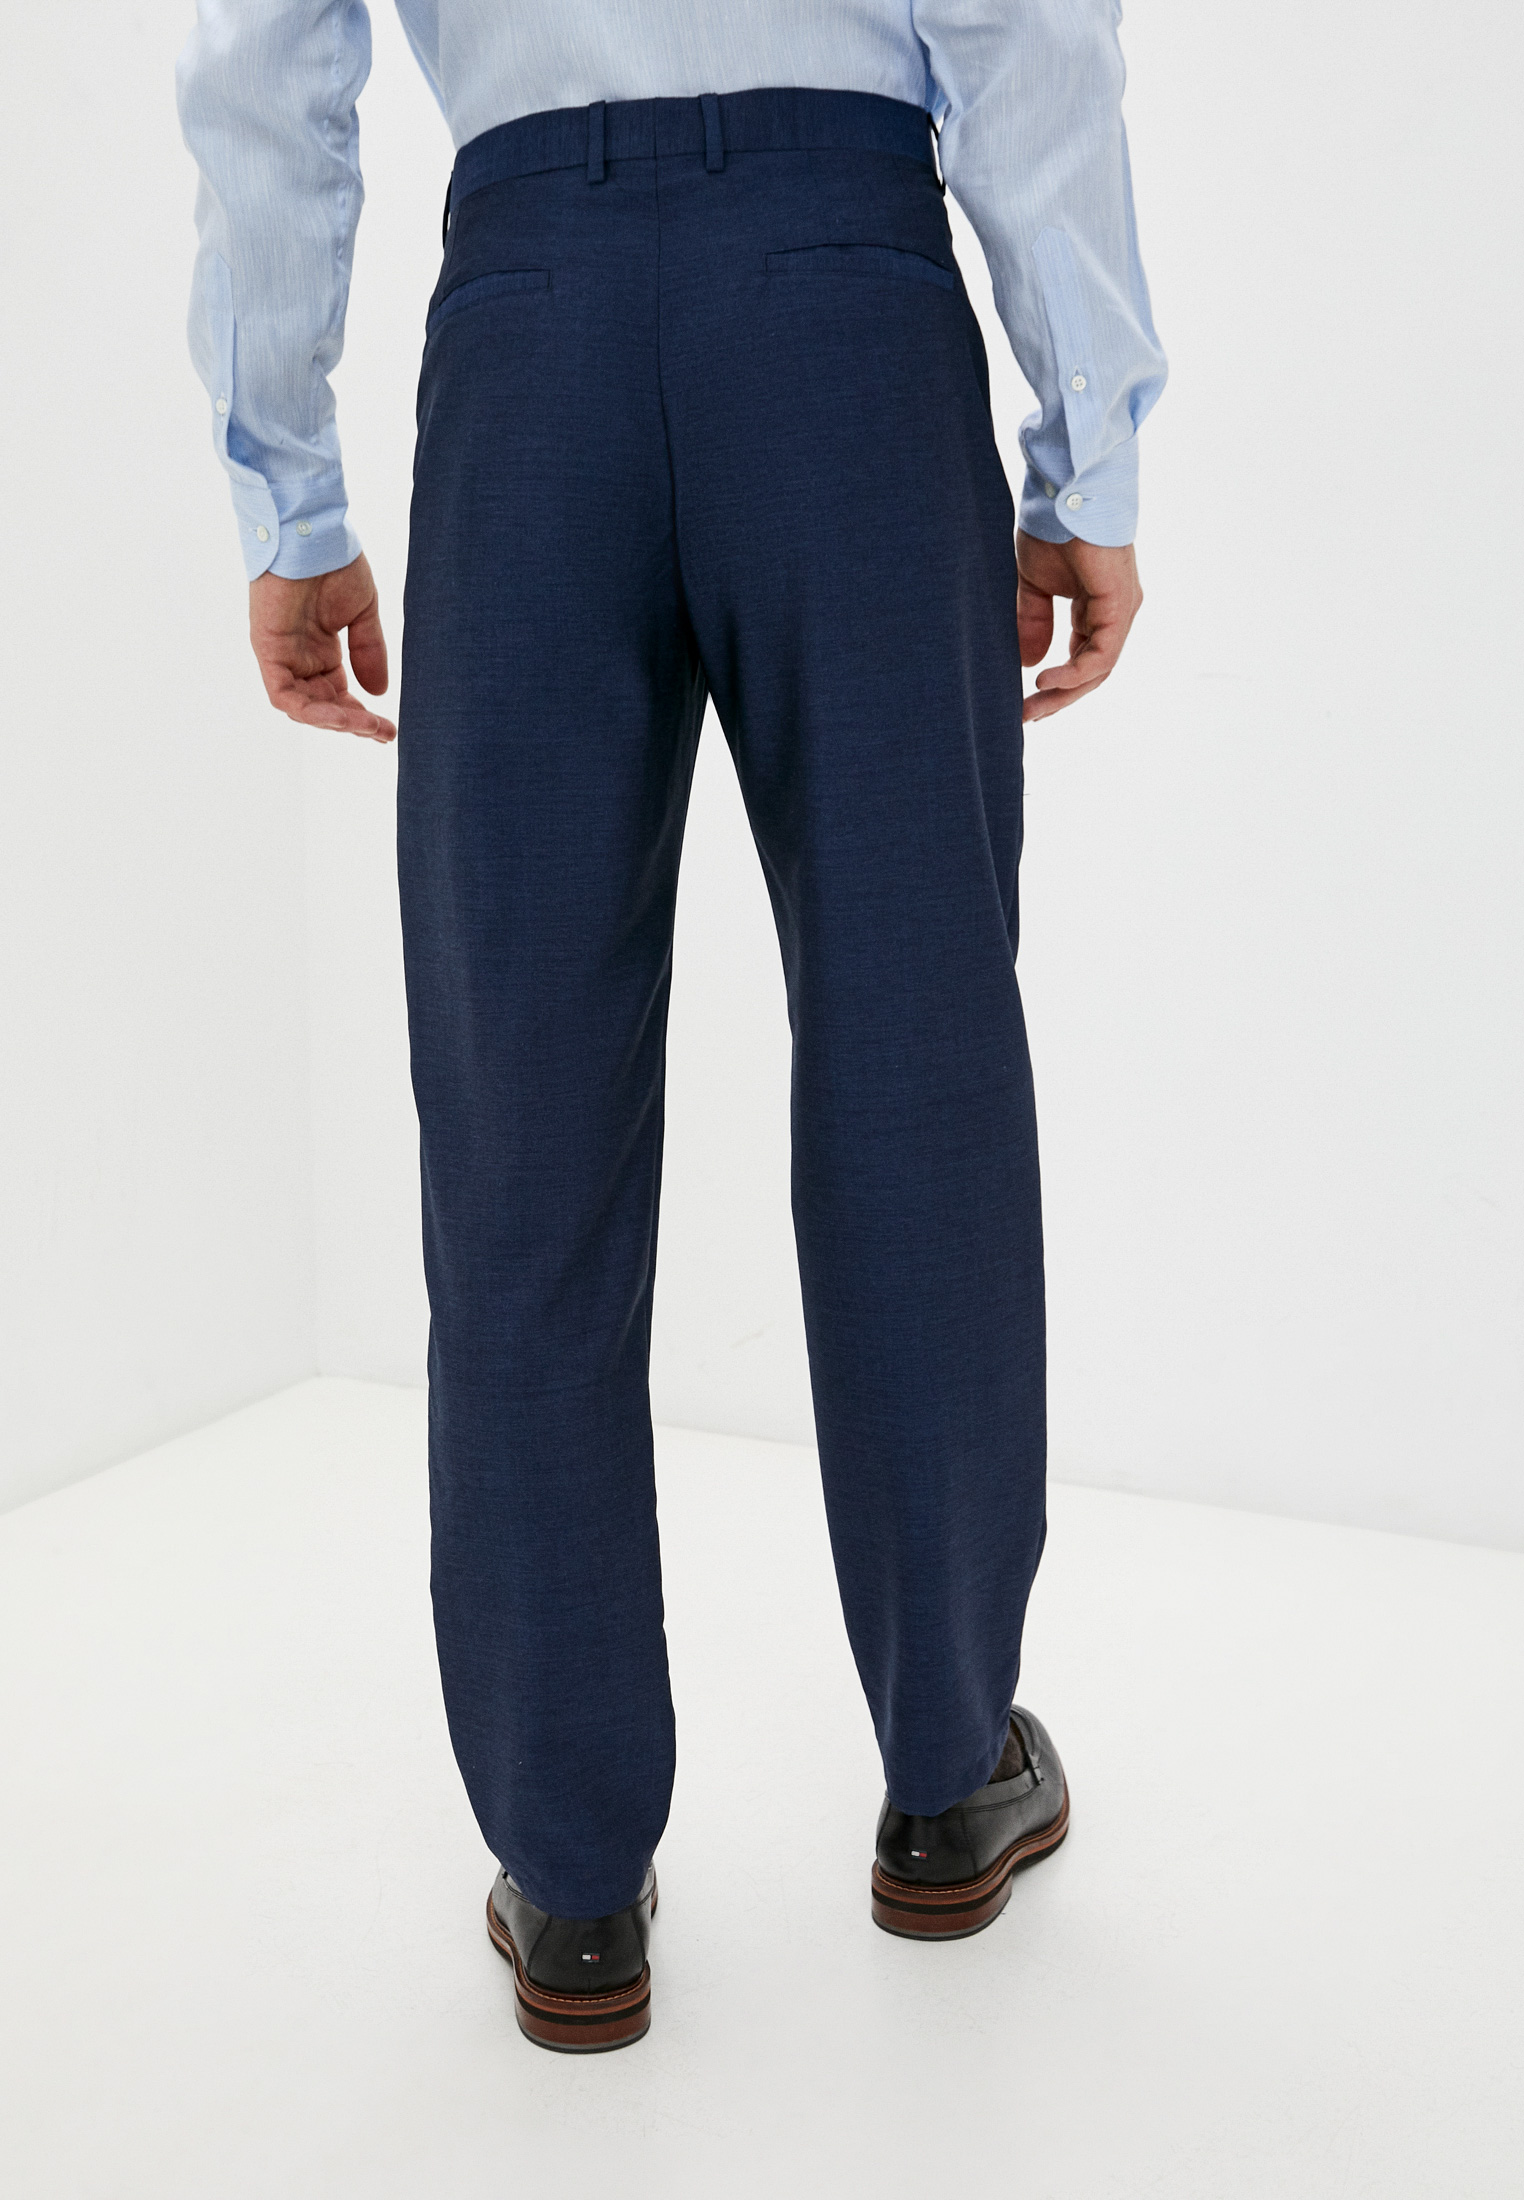 Мужские классические брюки Emporio Armani (Эмпорио Армани) W1P21A W1032: изображение 4